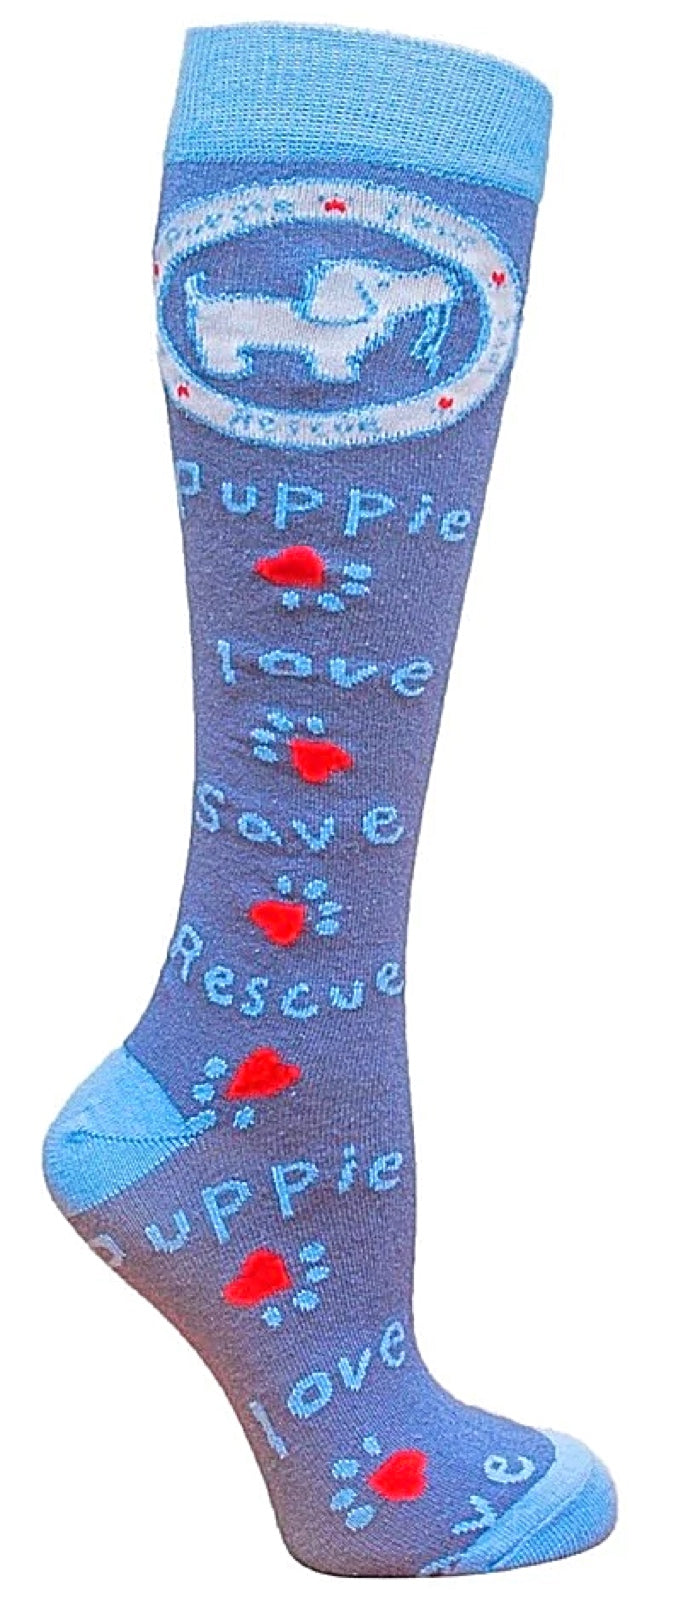 PUPPIE LOVE BY SOCKS N SOCKS Brand Adult Knee High Socks 'PUPPIE LOVE SAVE RESCUE'